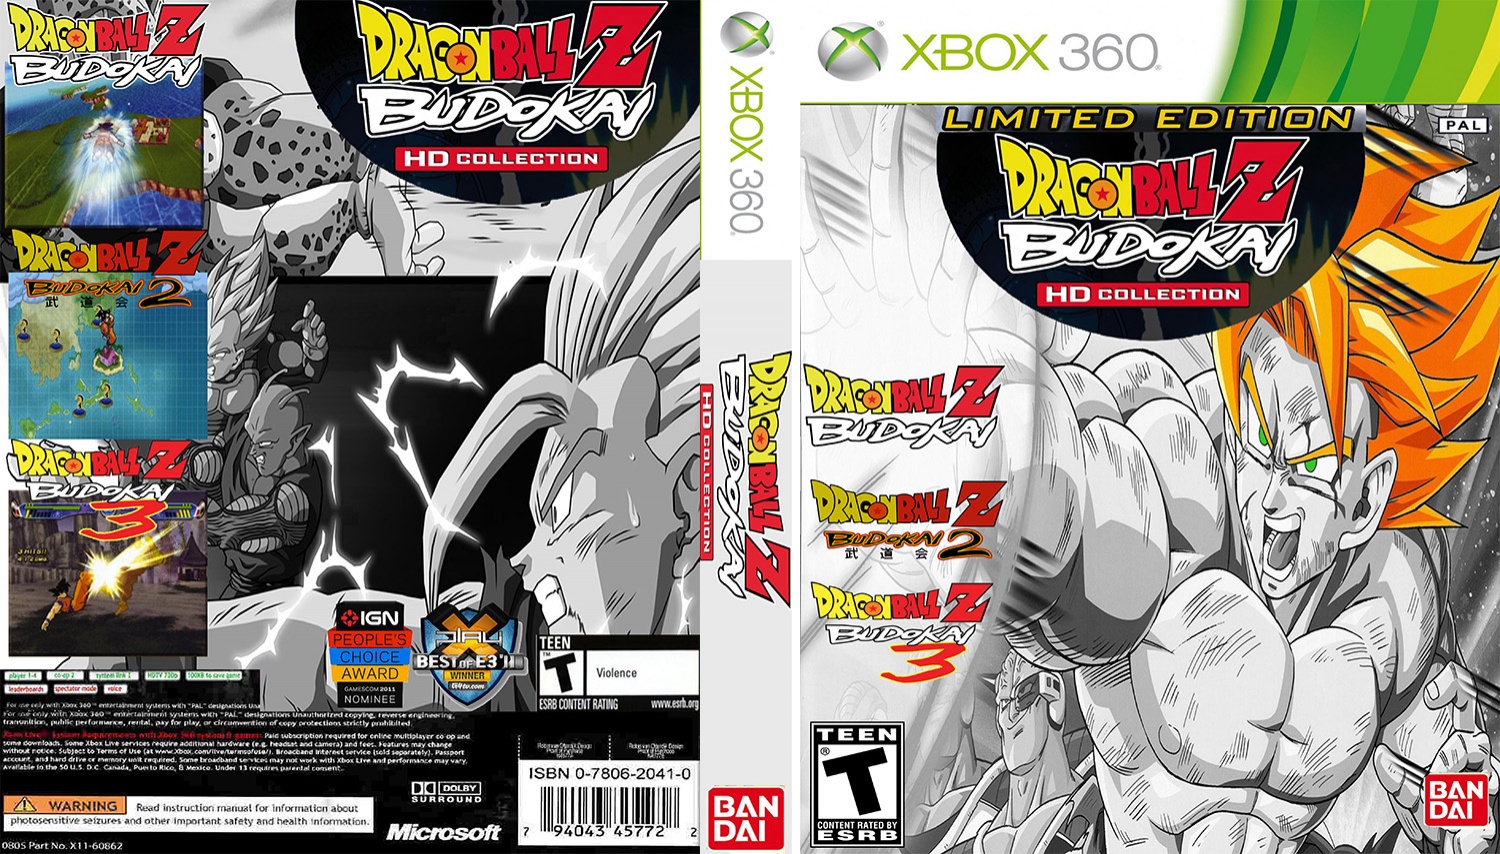 Dragonball Z: Budokai HD Collection box cover